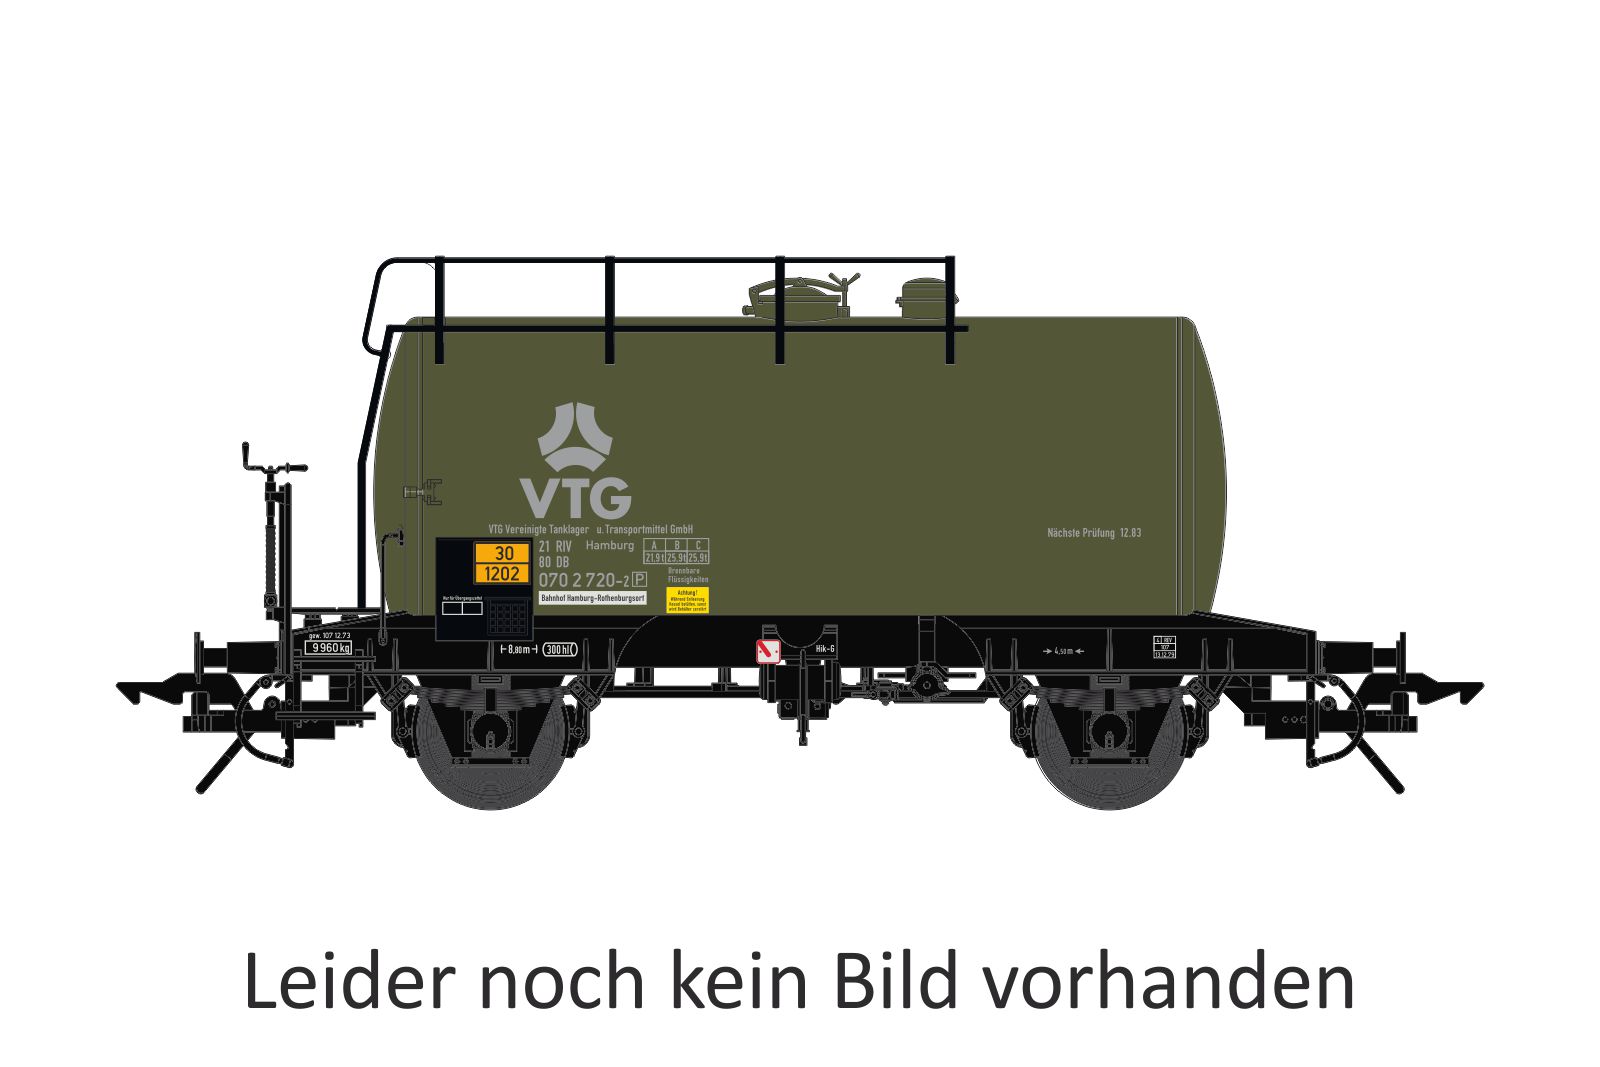 Kesselwagen "VTG" Betr.-Nr. 21 80 070 2 720-2